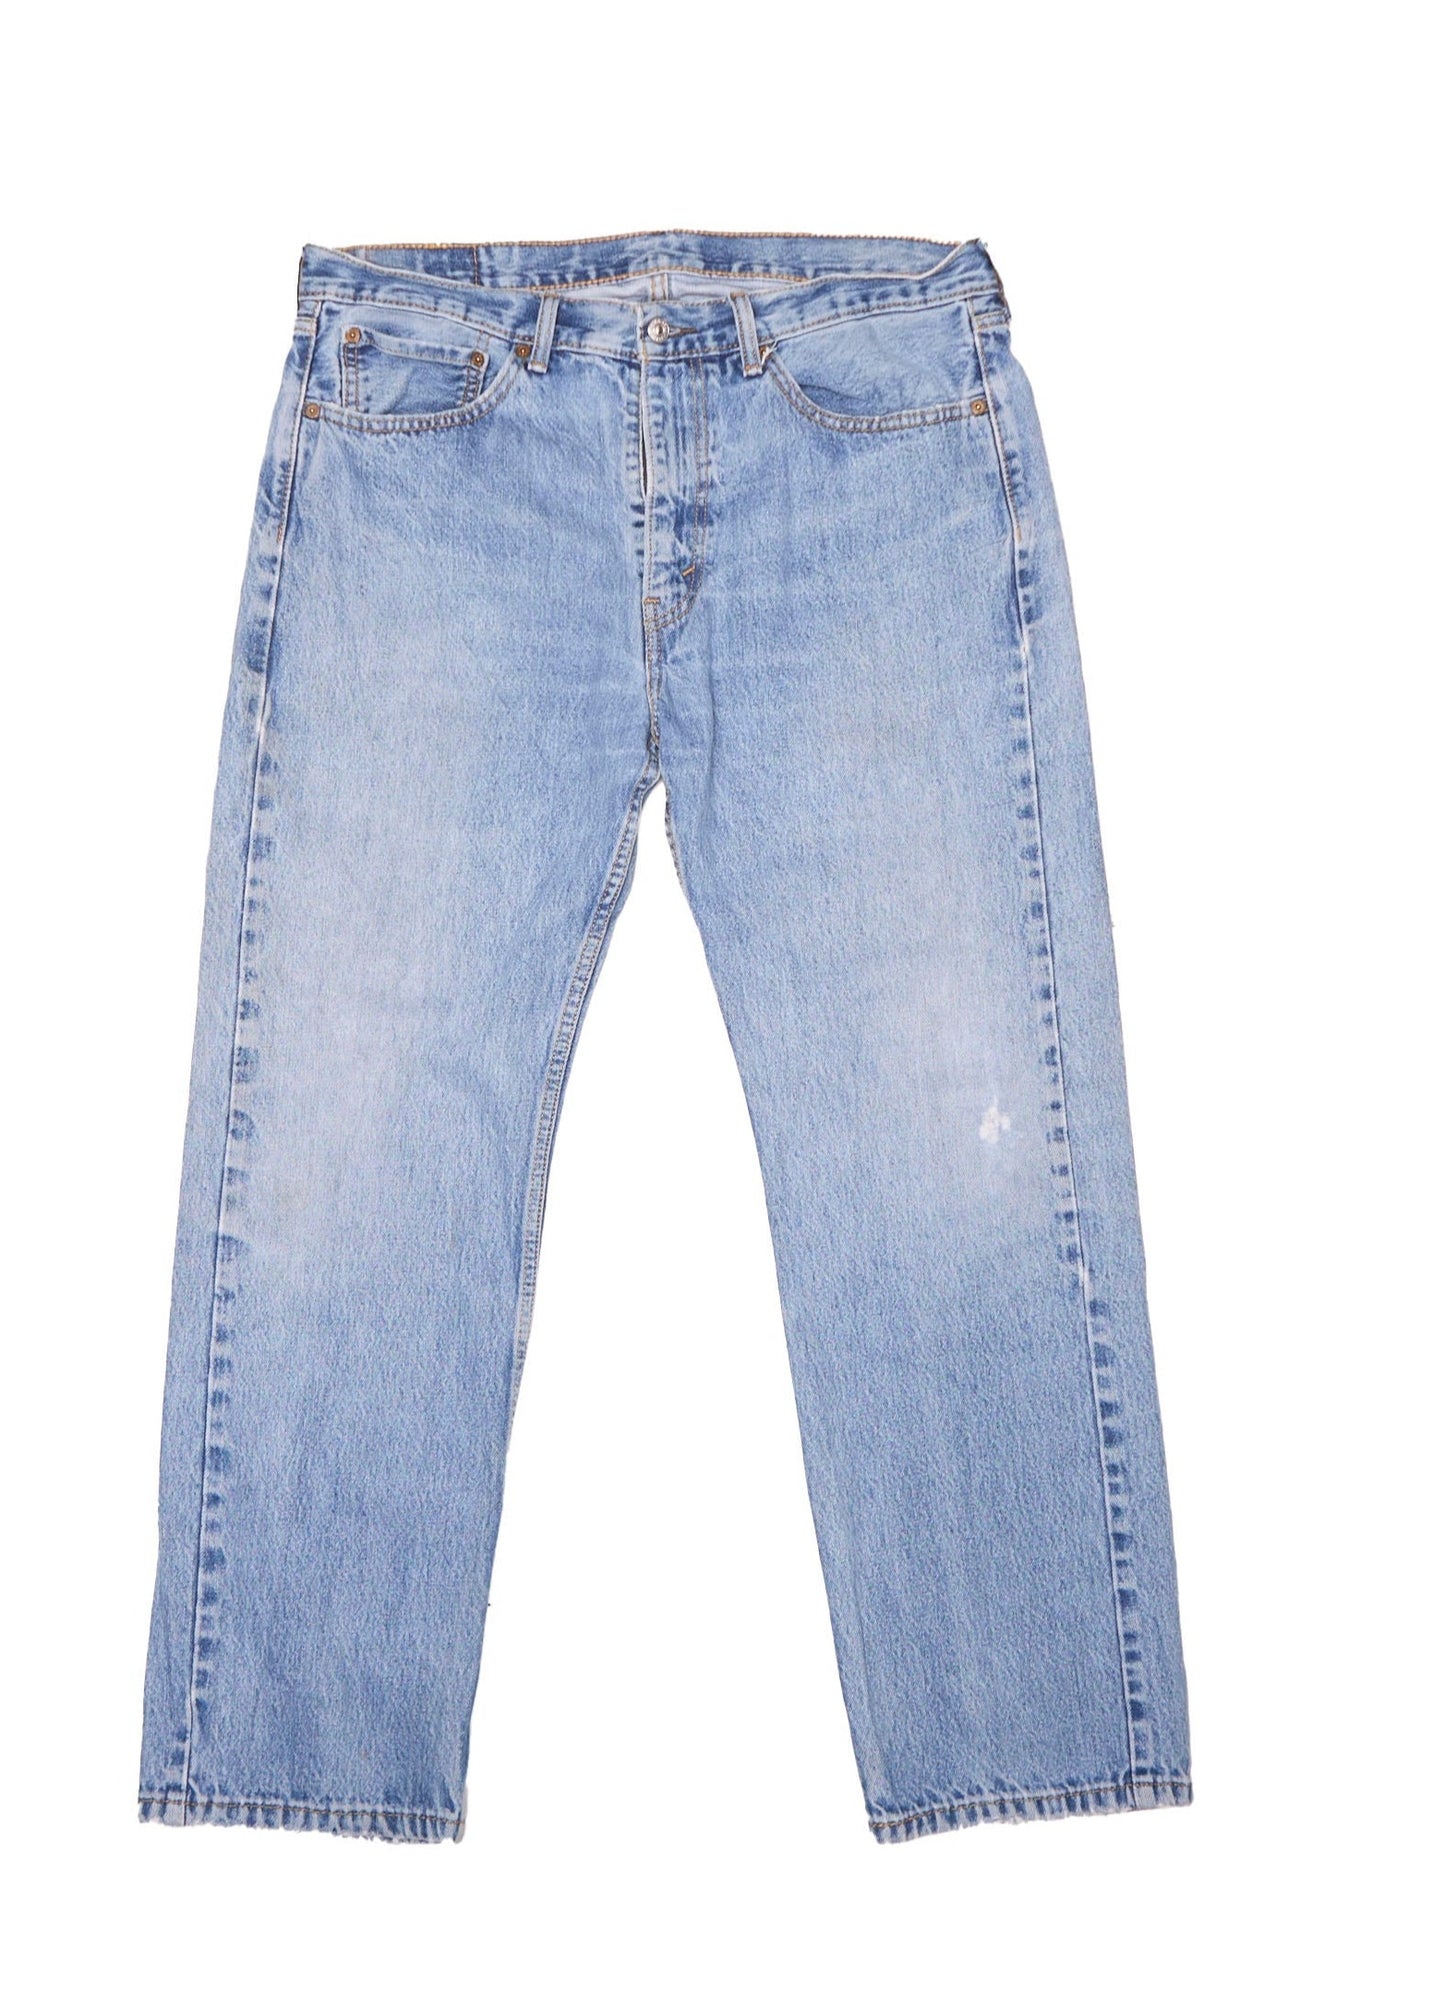 Zip Levis Straight Cut Jeans - W36" L29"